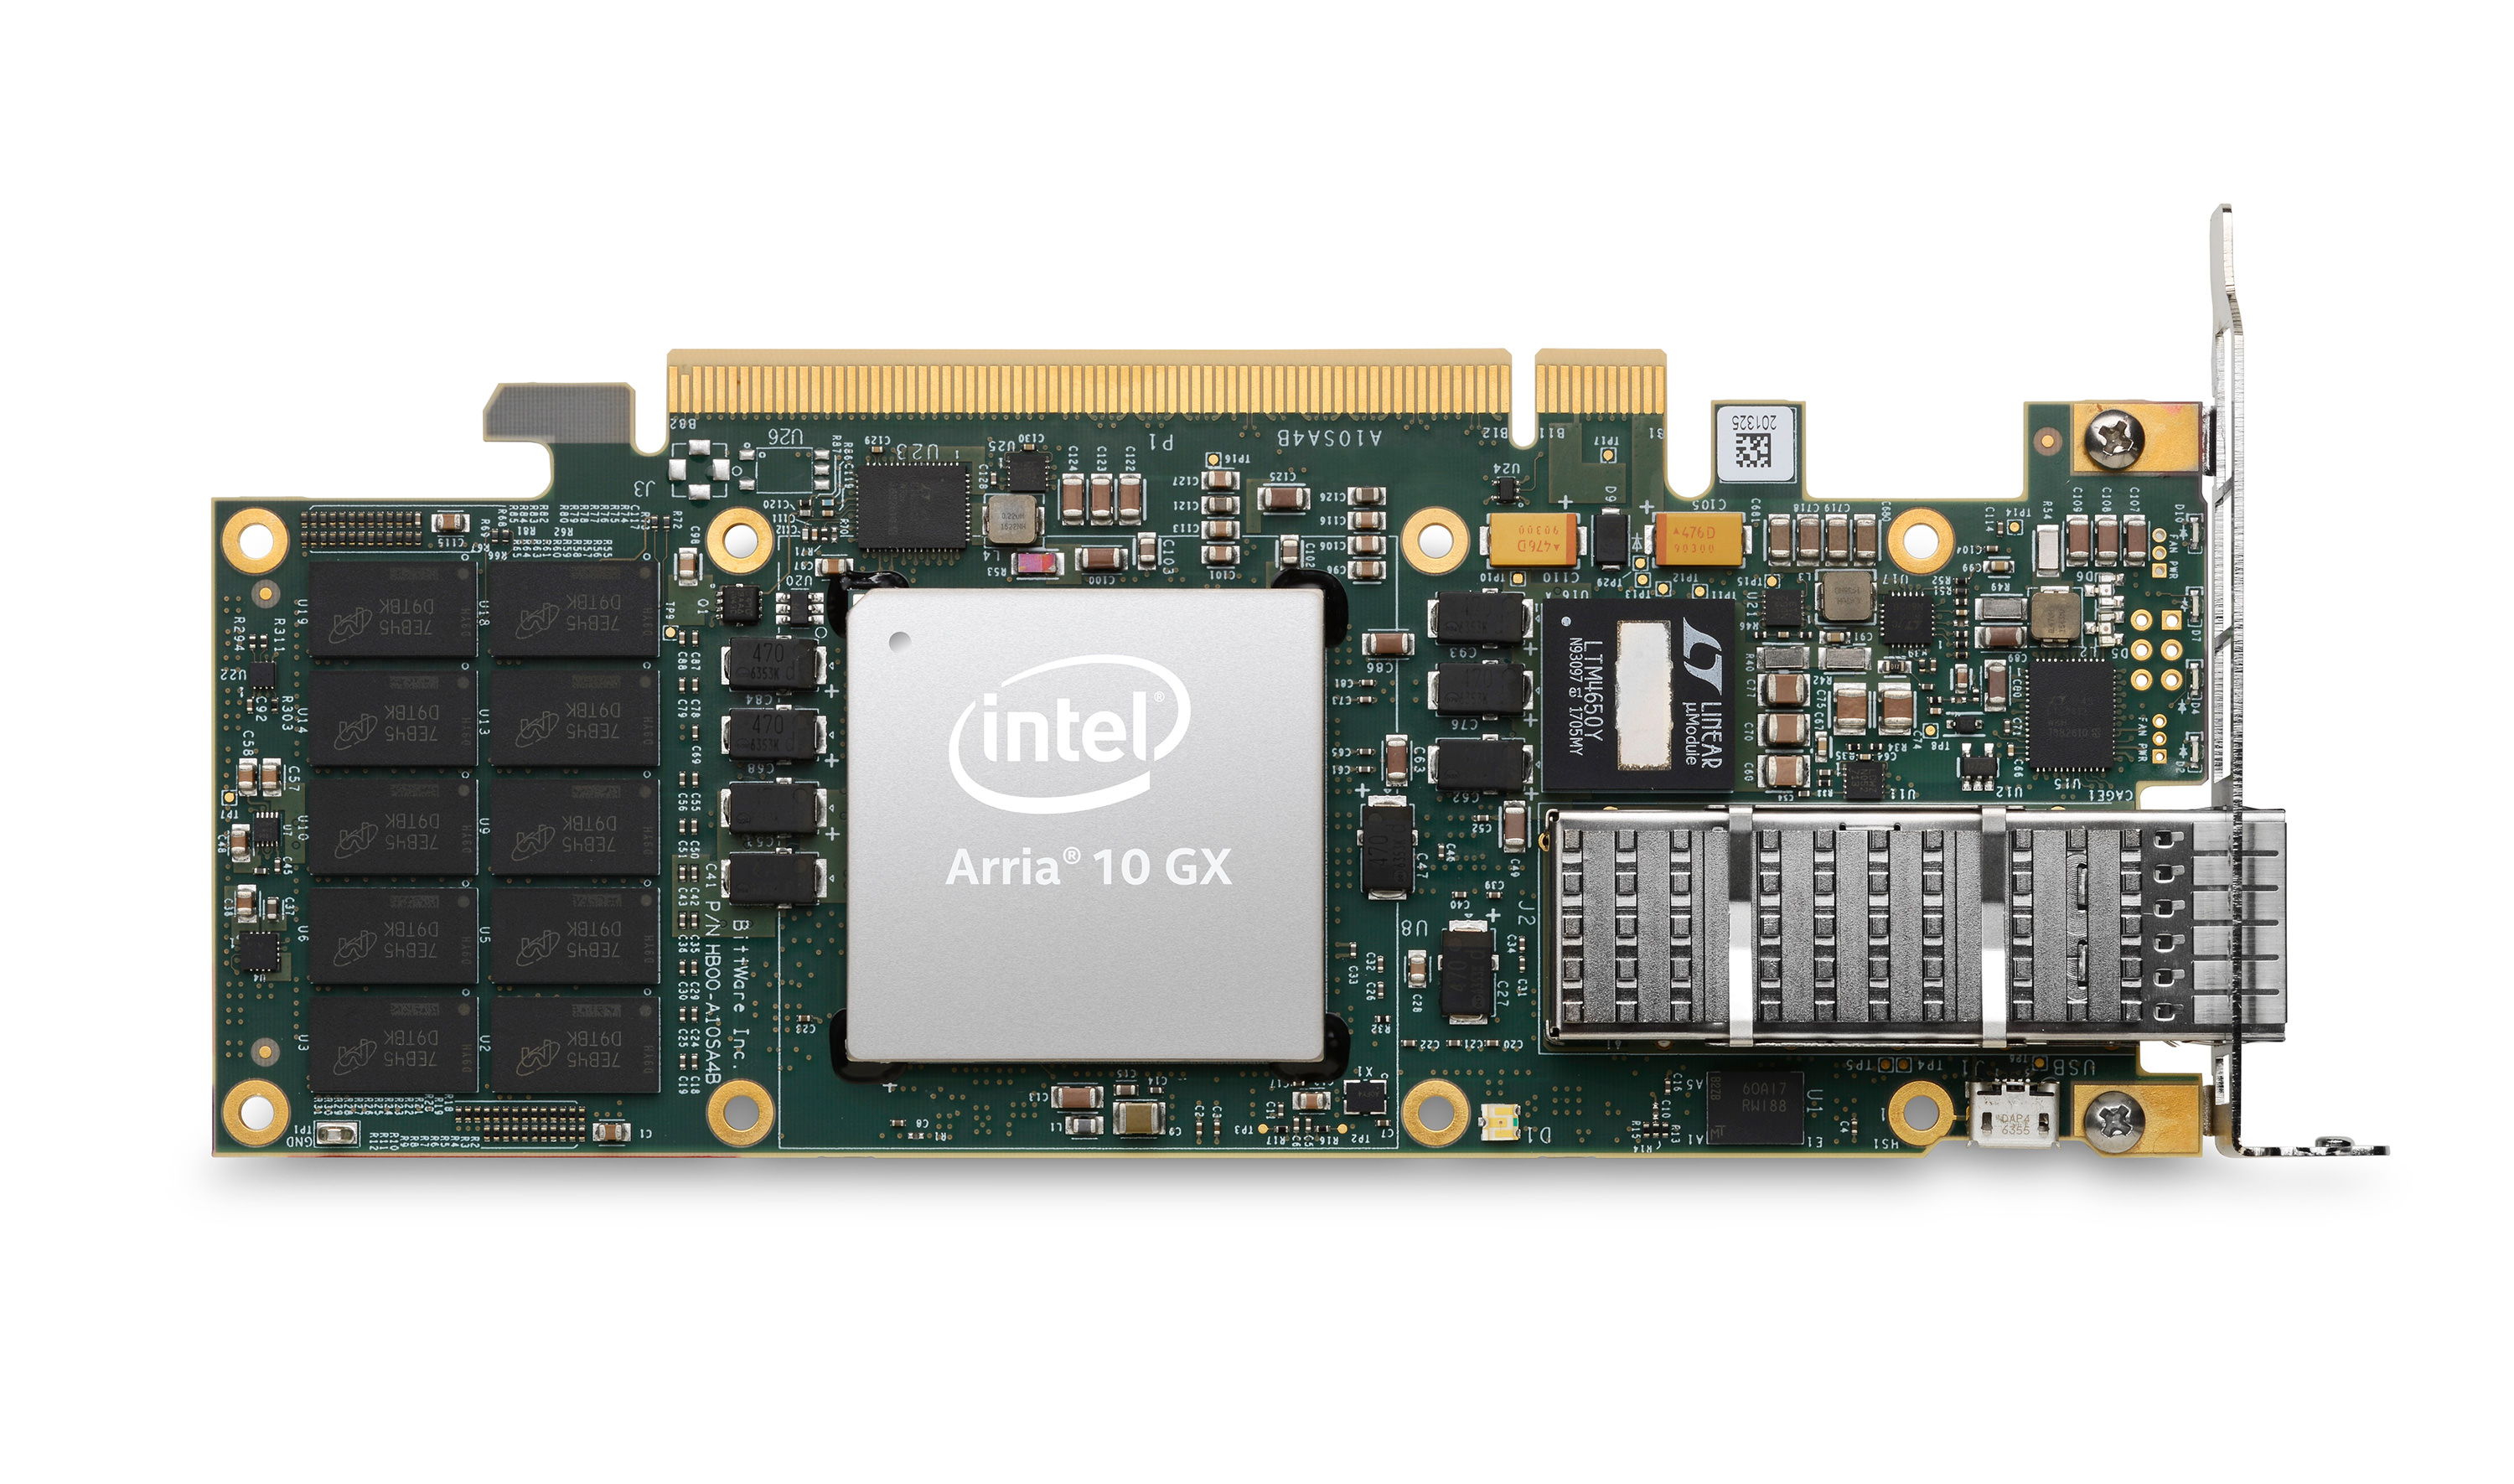 Intel pushes FPGAs for mainstream enterprise acceleration